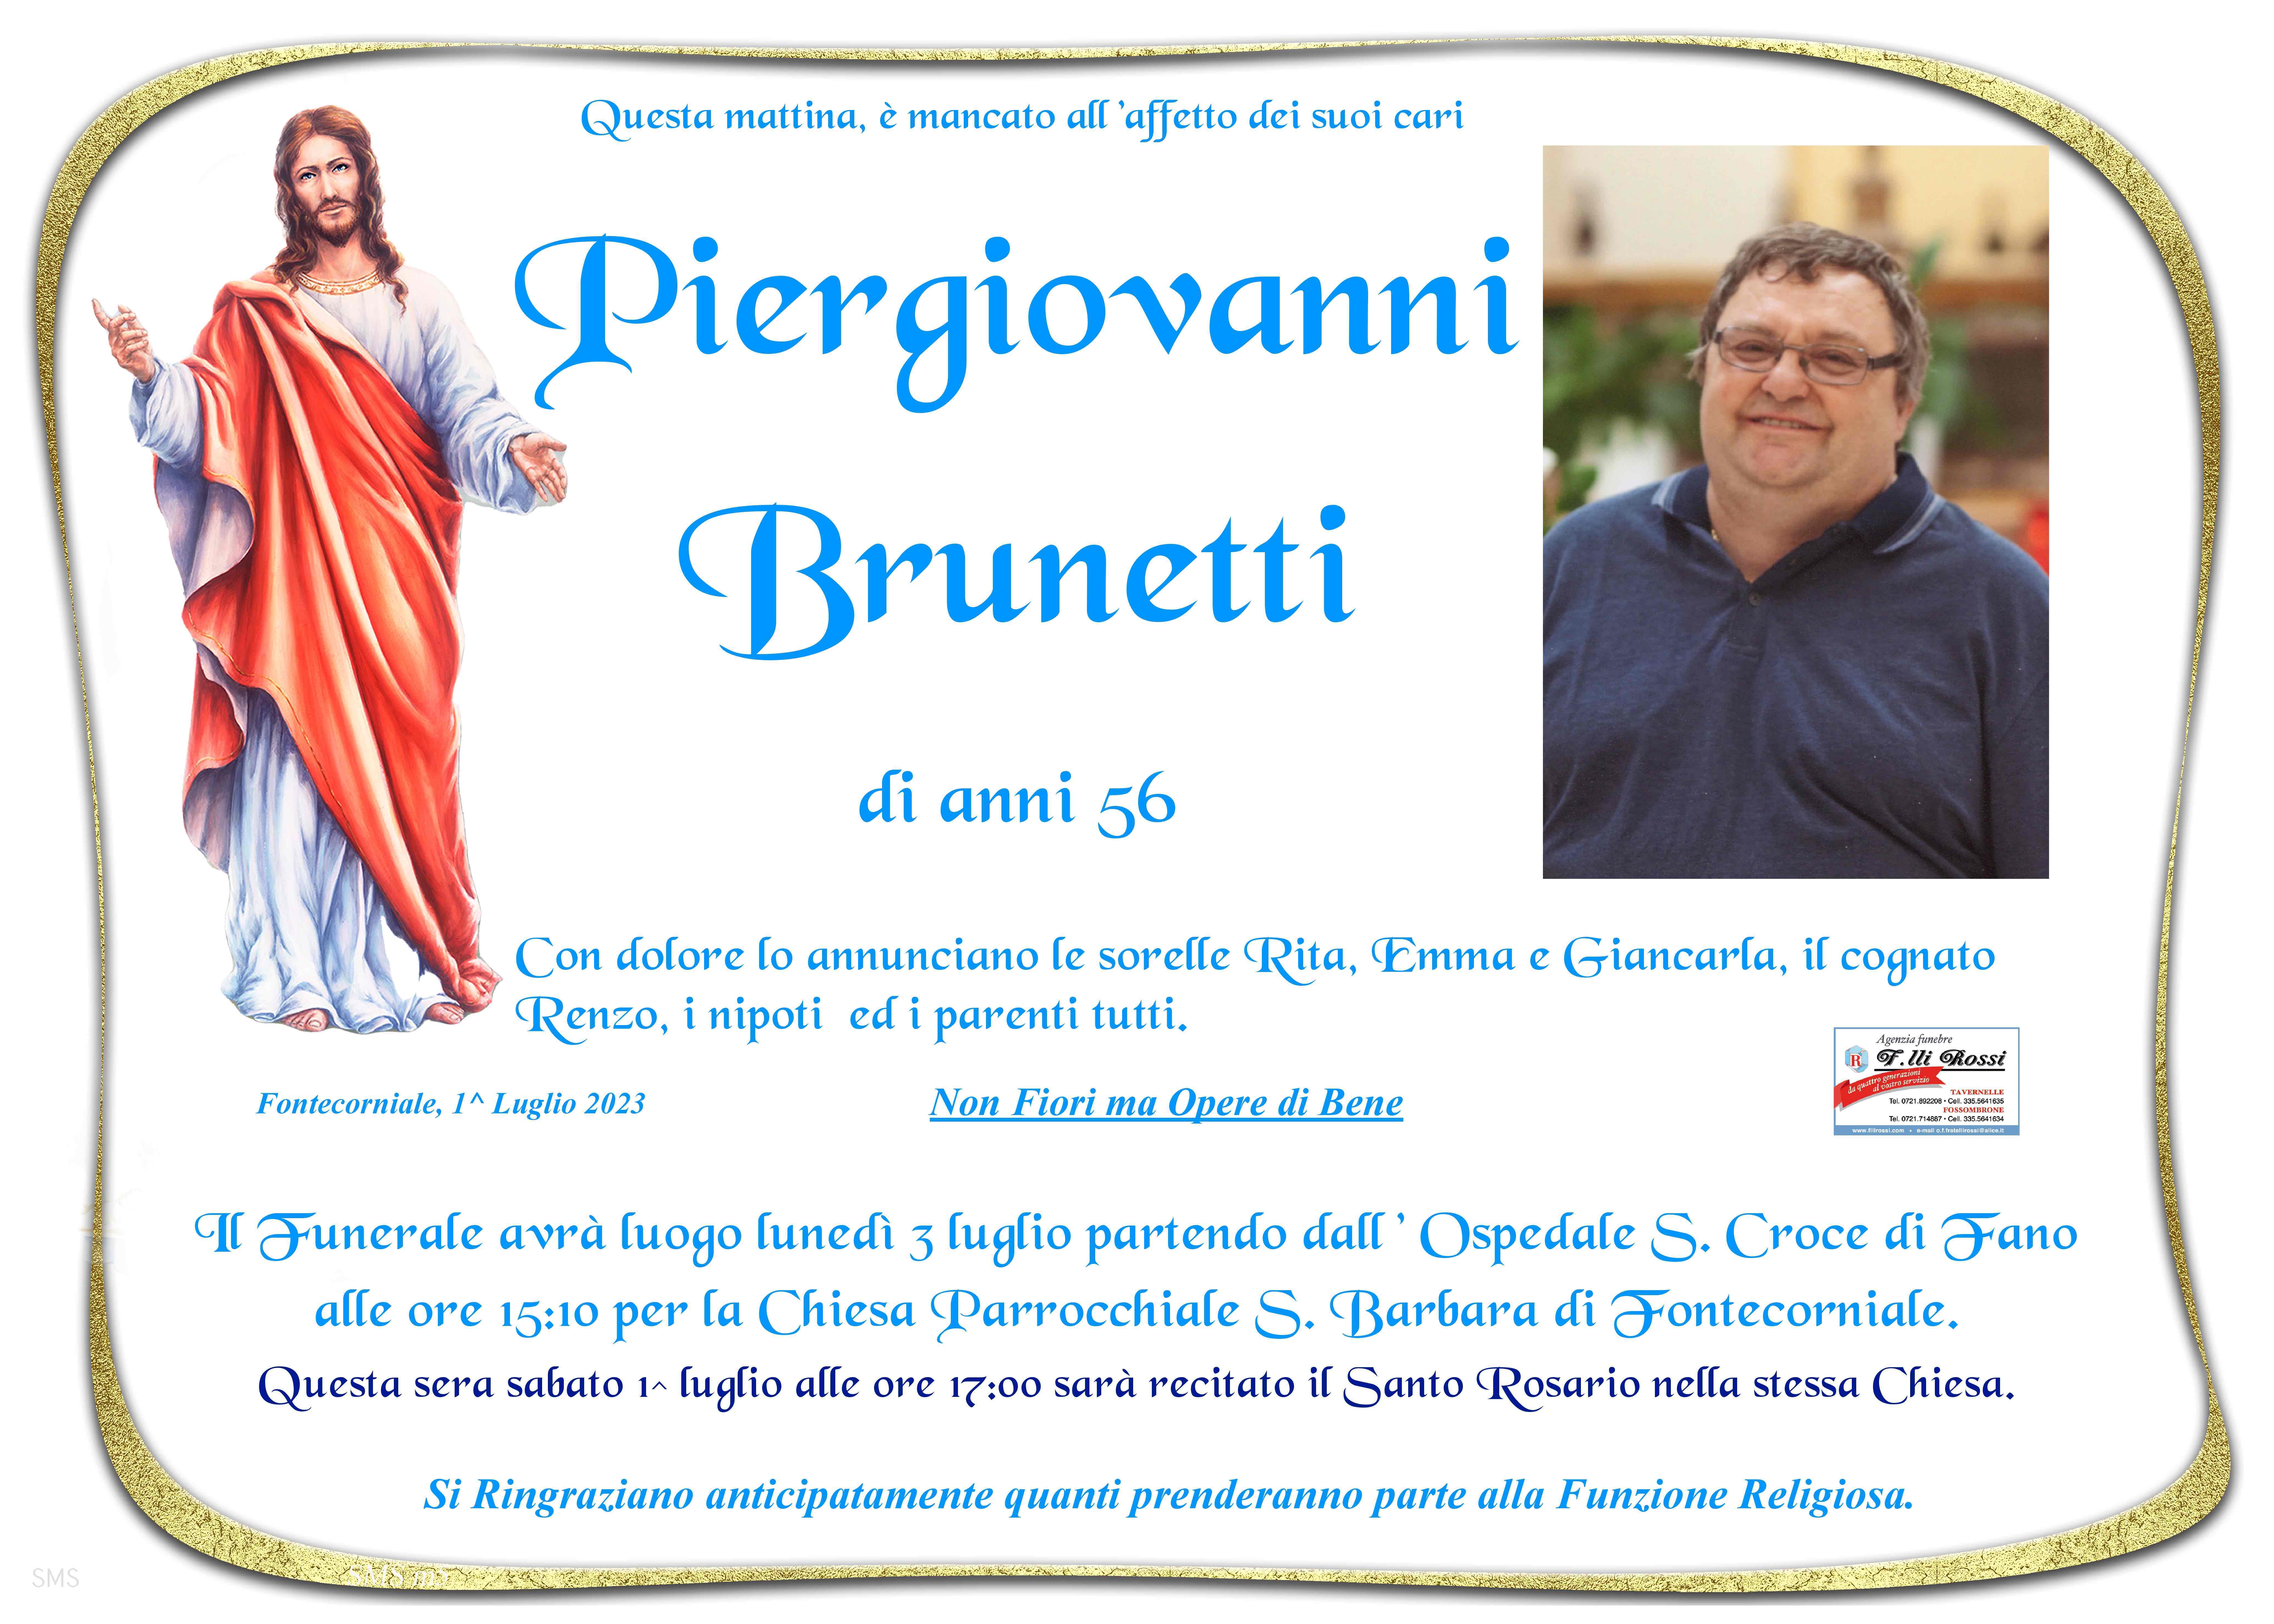 Piergiovanni Brunetti